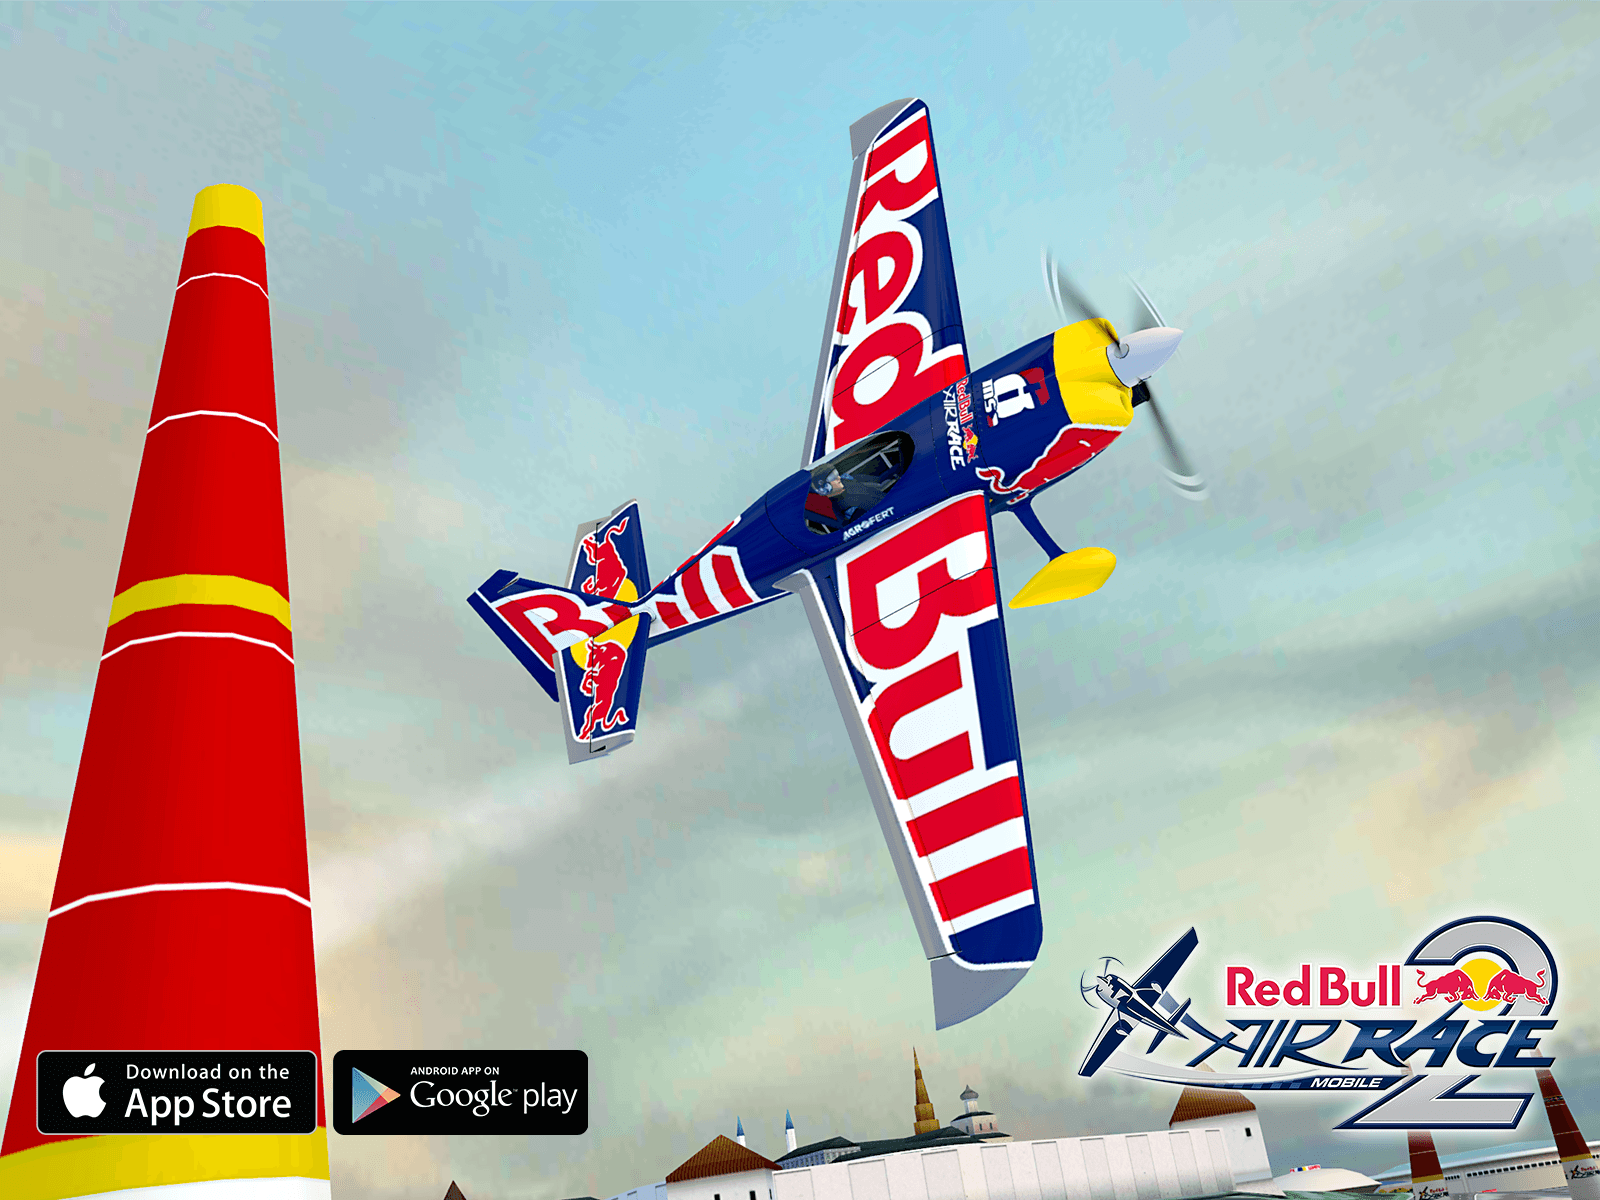 Red Bull Air Race Mobile Game 2. Red Bull Air Race